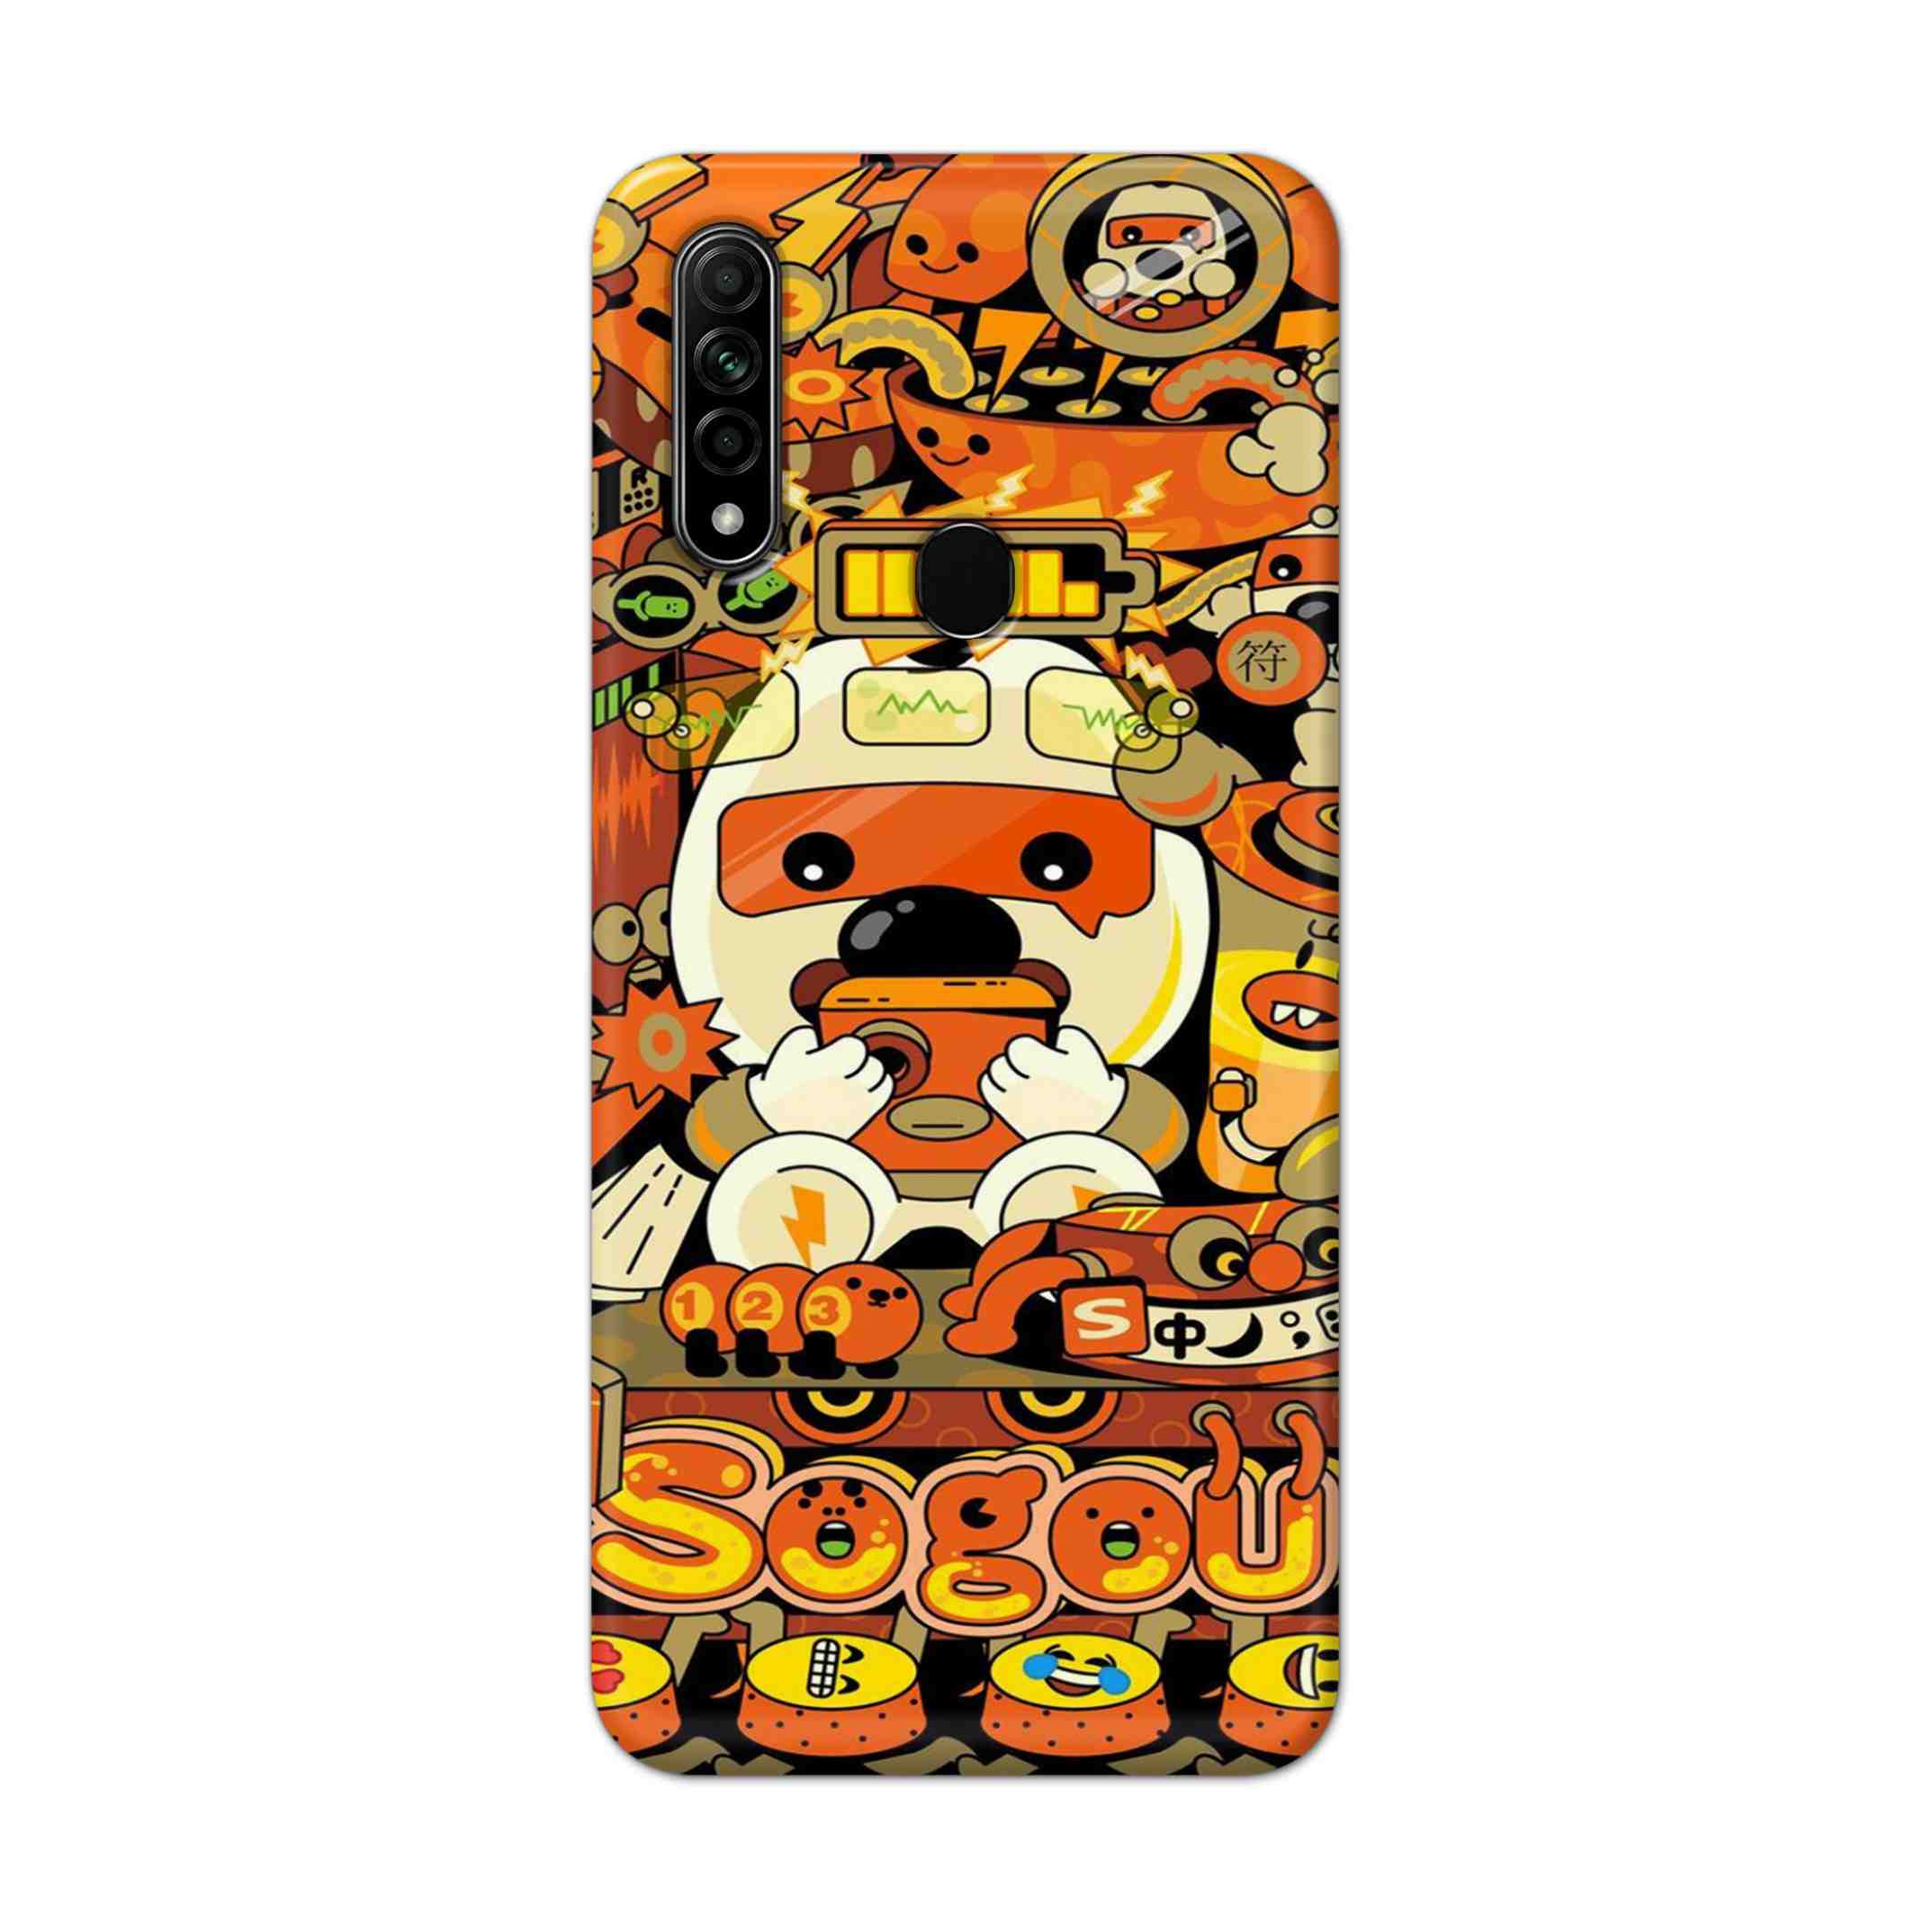 Buy Sogou Hard Back Mobile Phone Case Cover For Oppo A31 (2020) Online